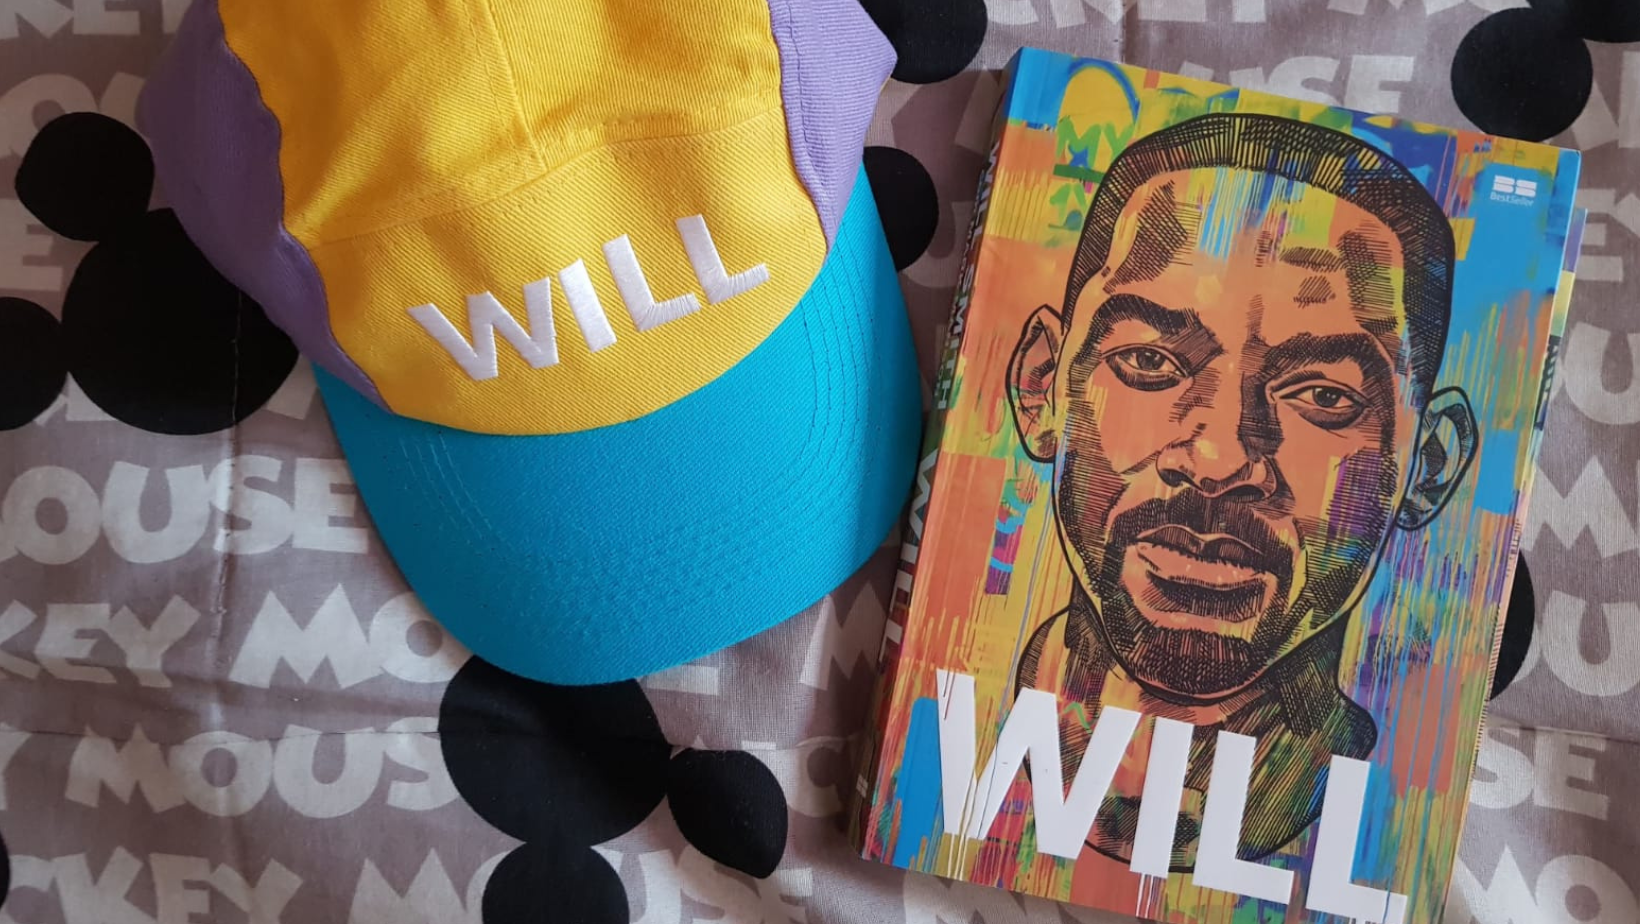 Veja sobre "Will", de Mark Manson e Will Smith